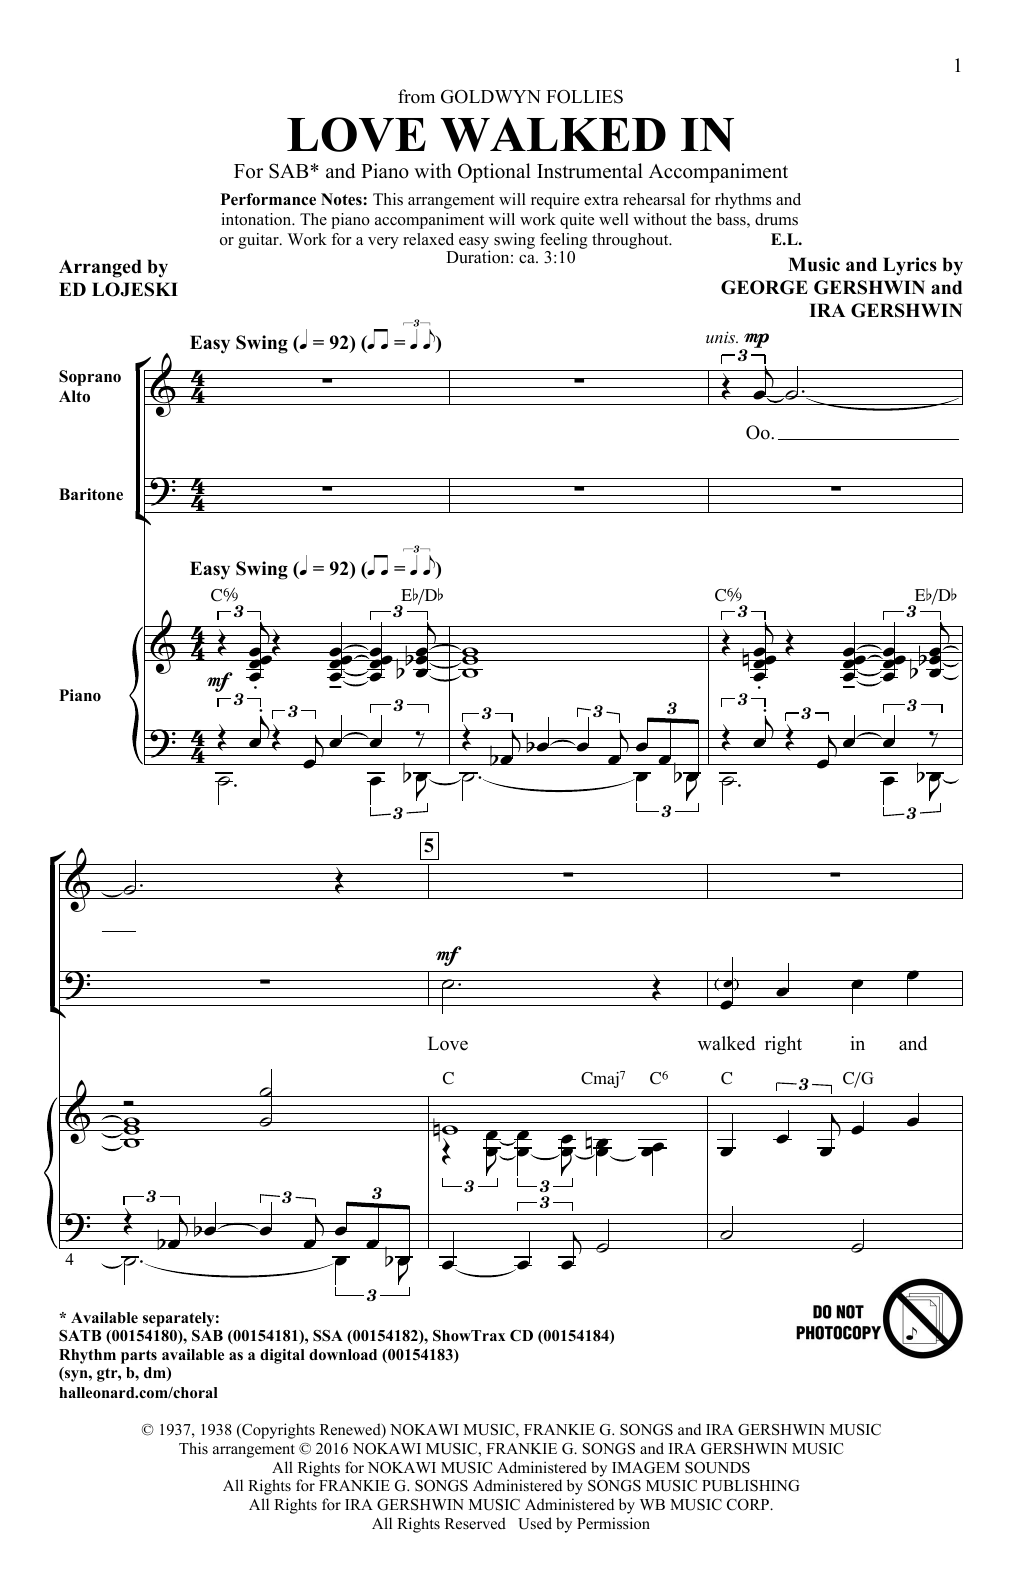 Ed Lojeski Love Walked In Sheet Music Notes & Chords for SAB - Download or Print PDF